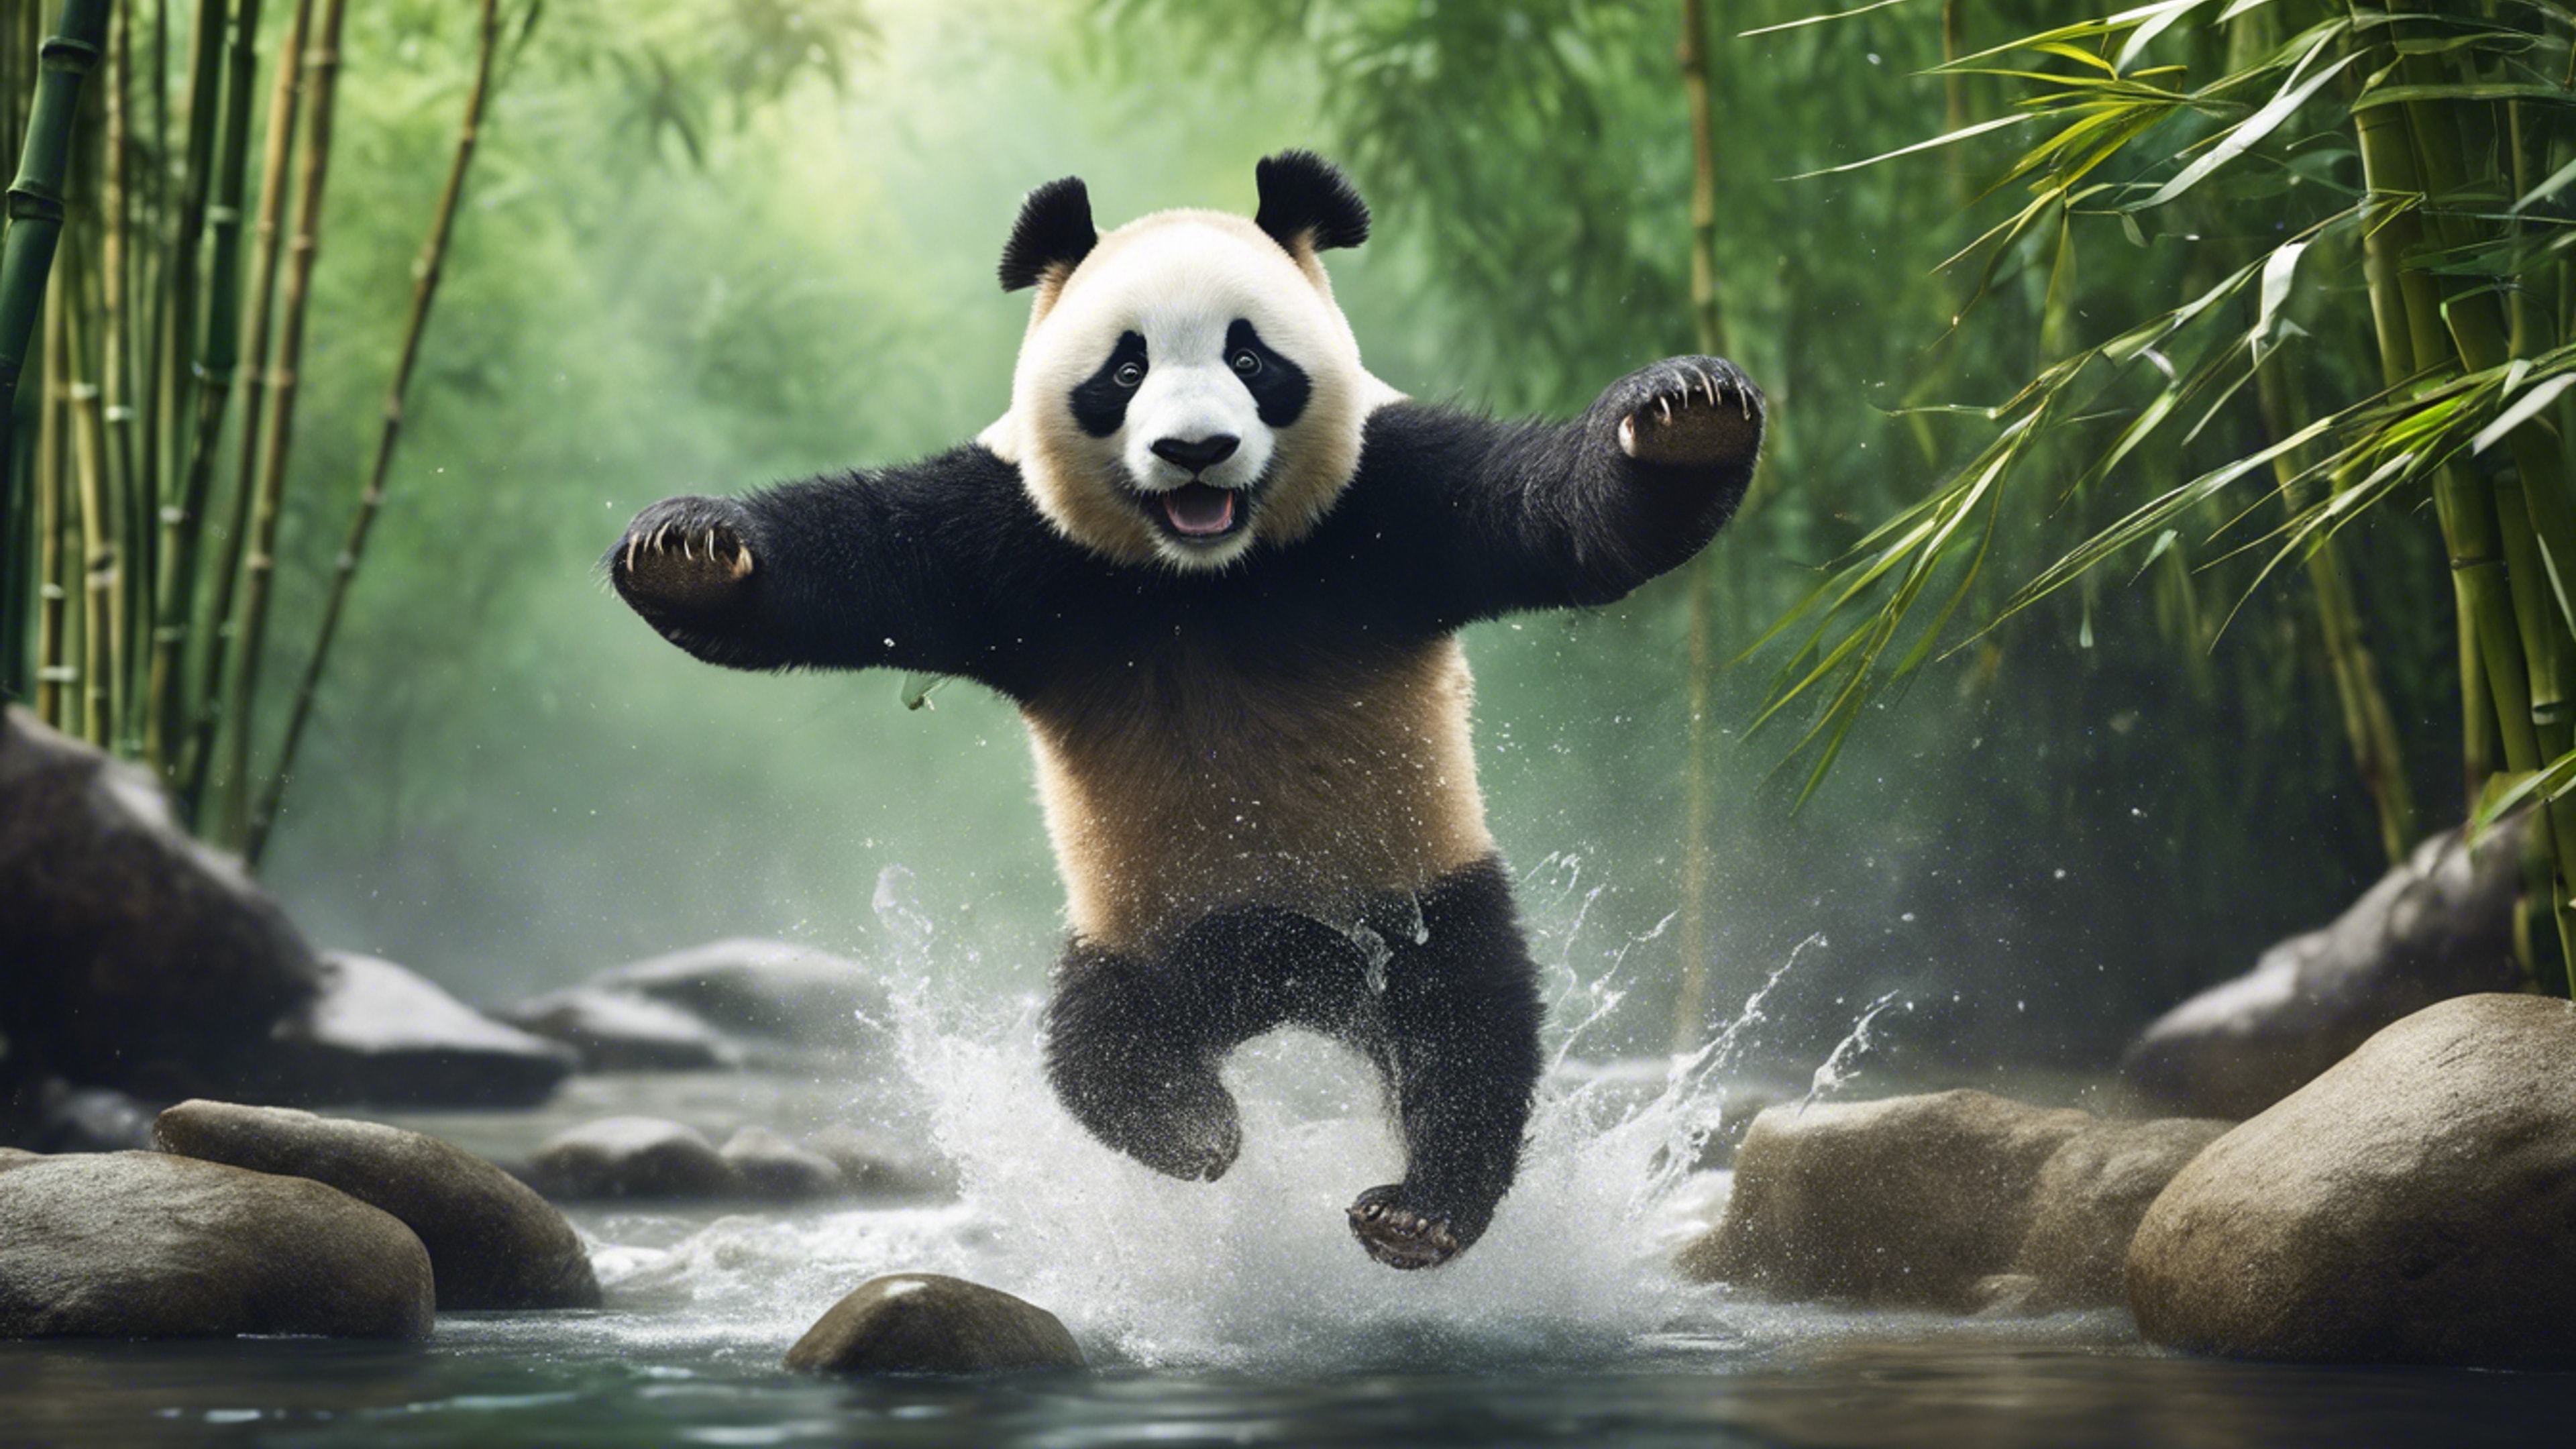 An adventurous panda leaping across a rapid creek with bamboo forests in the backdrop. Divar kağızı[317eaaa1af264f04a7c3]